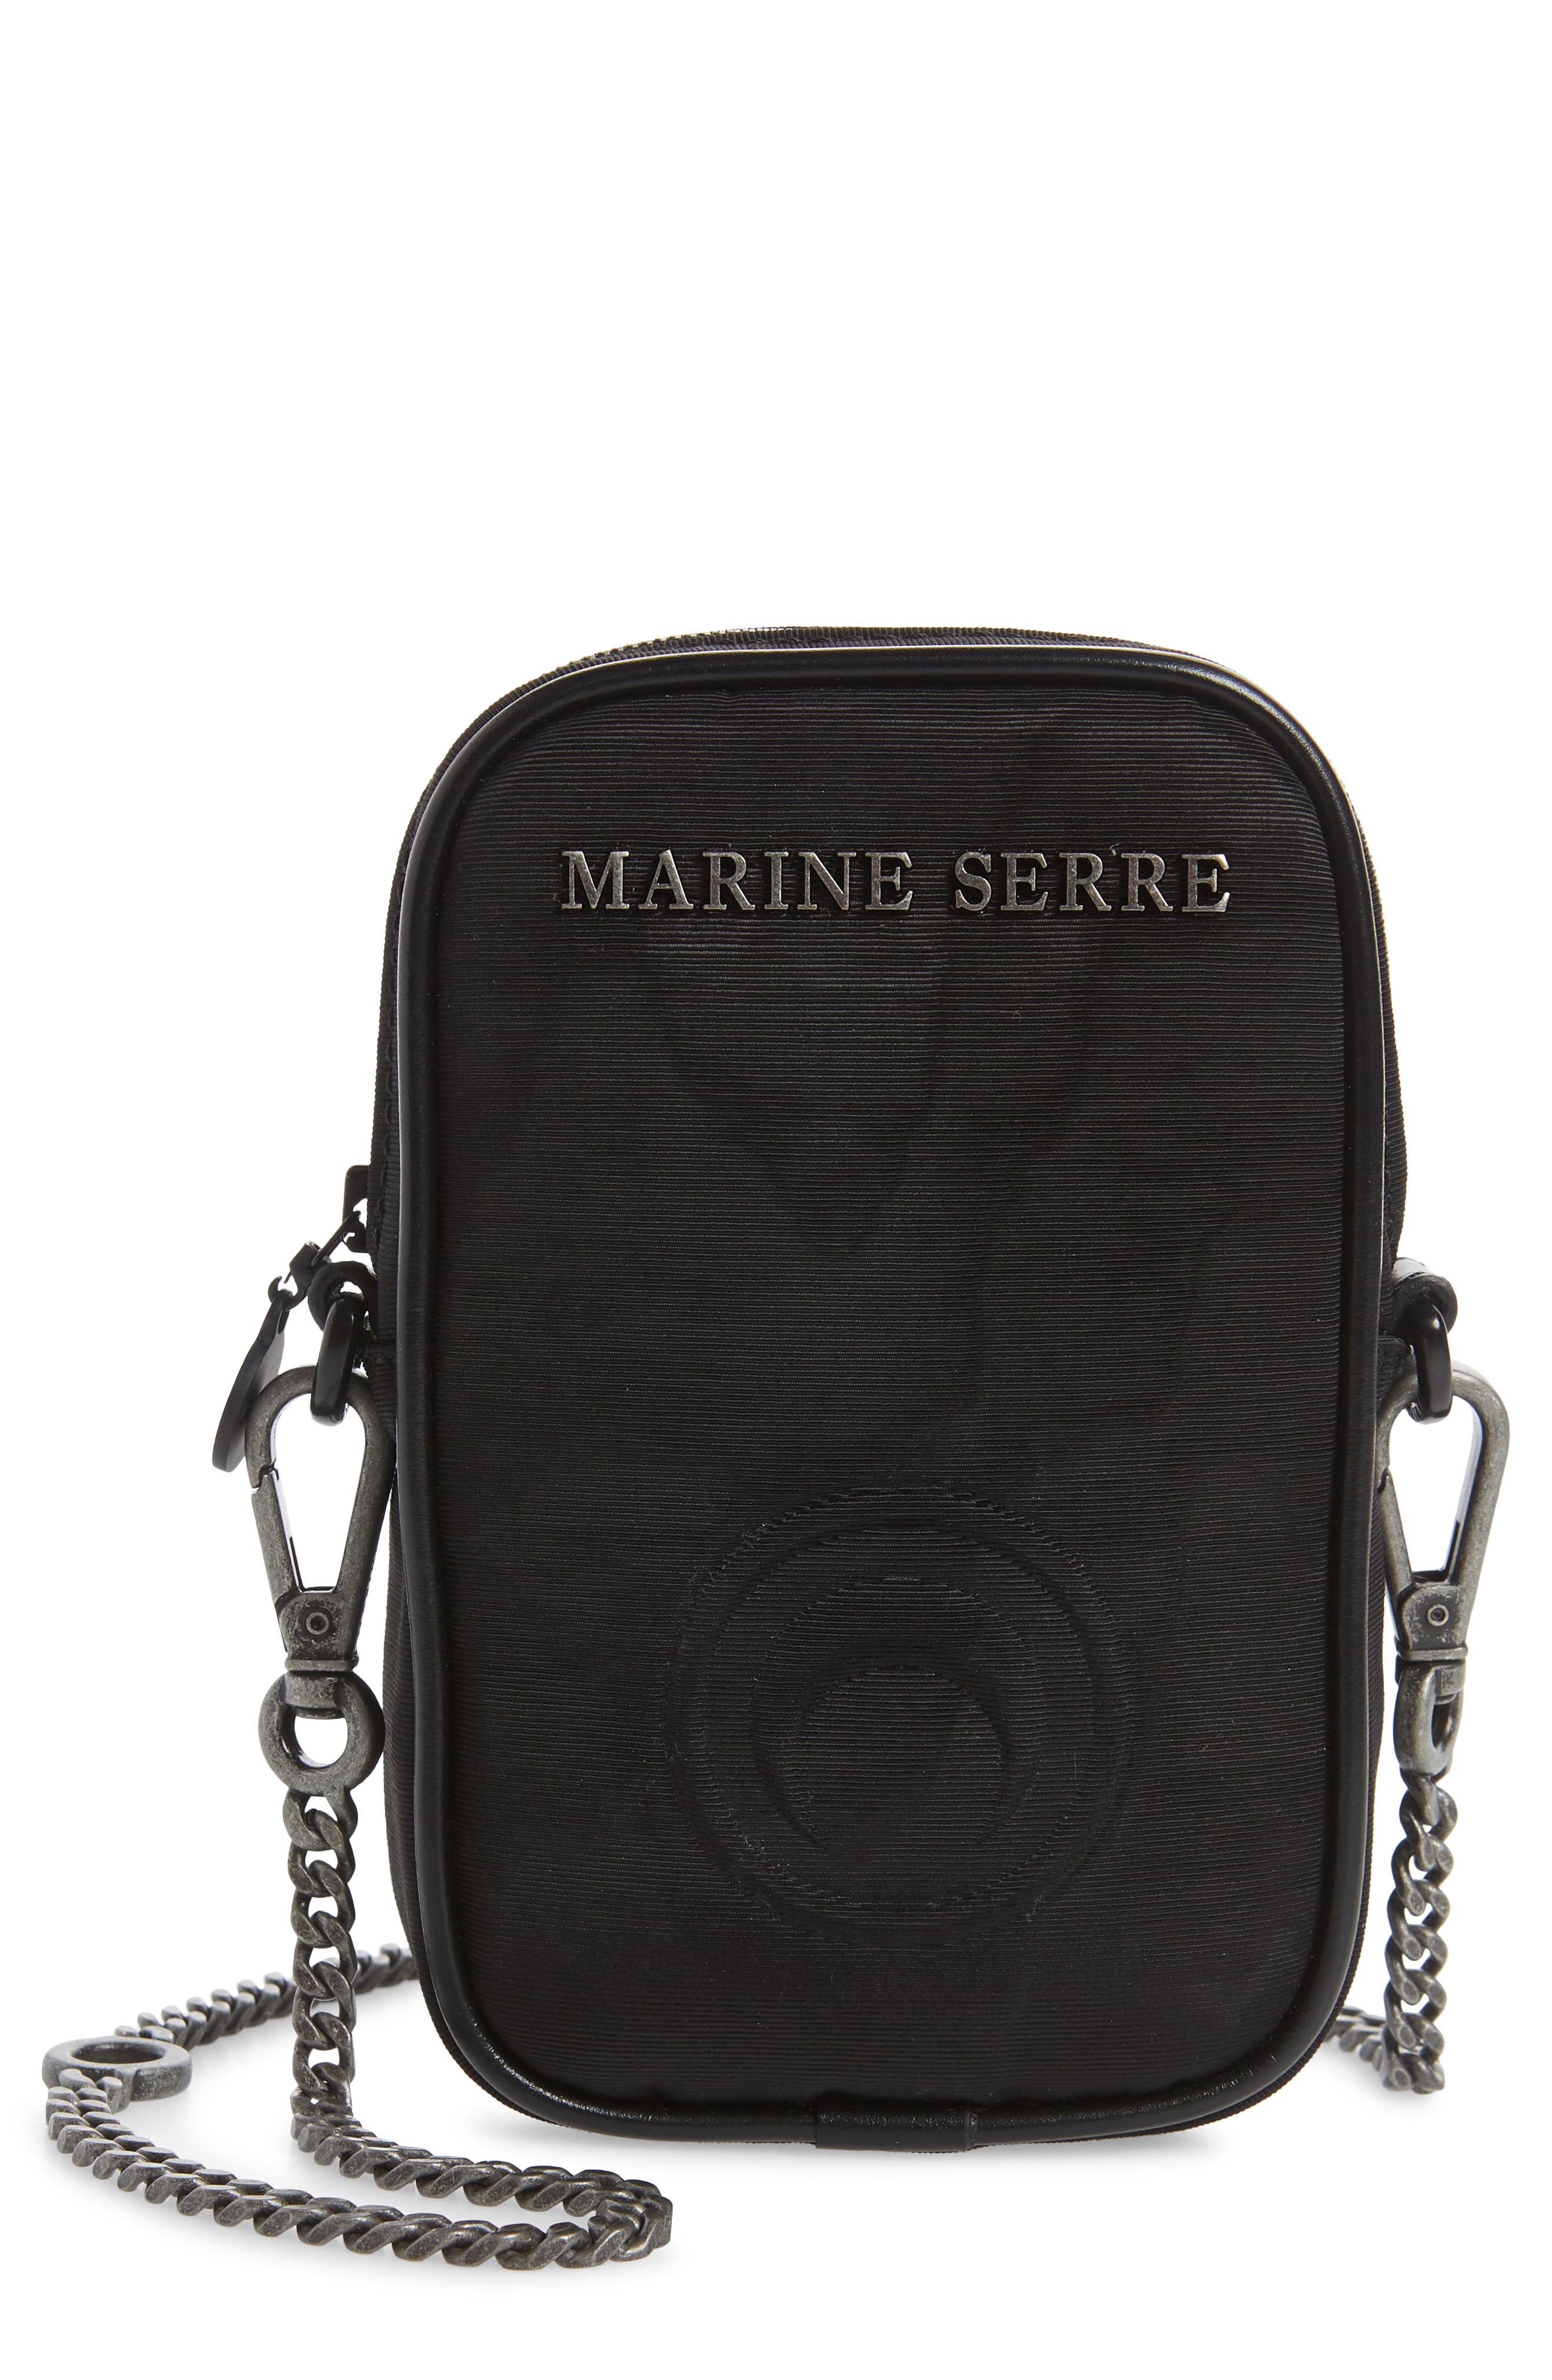 Marine Serre Phone Case Mini Crossbody Bag in Black at Nordstrom